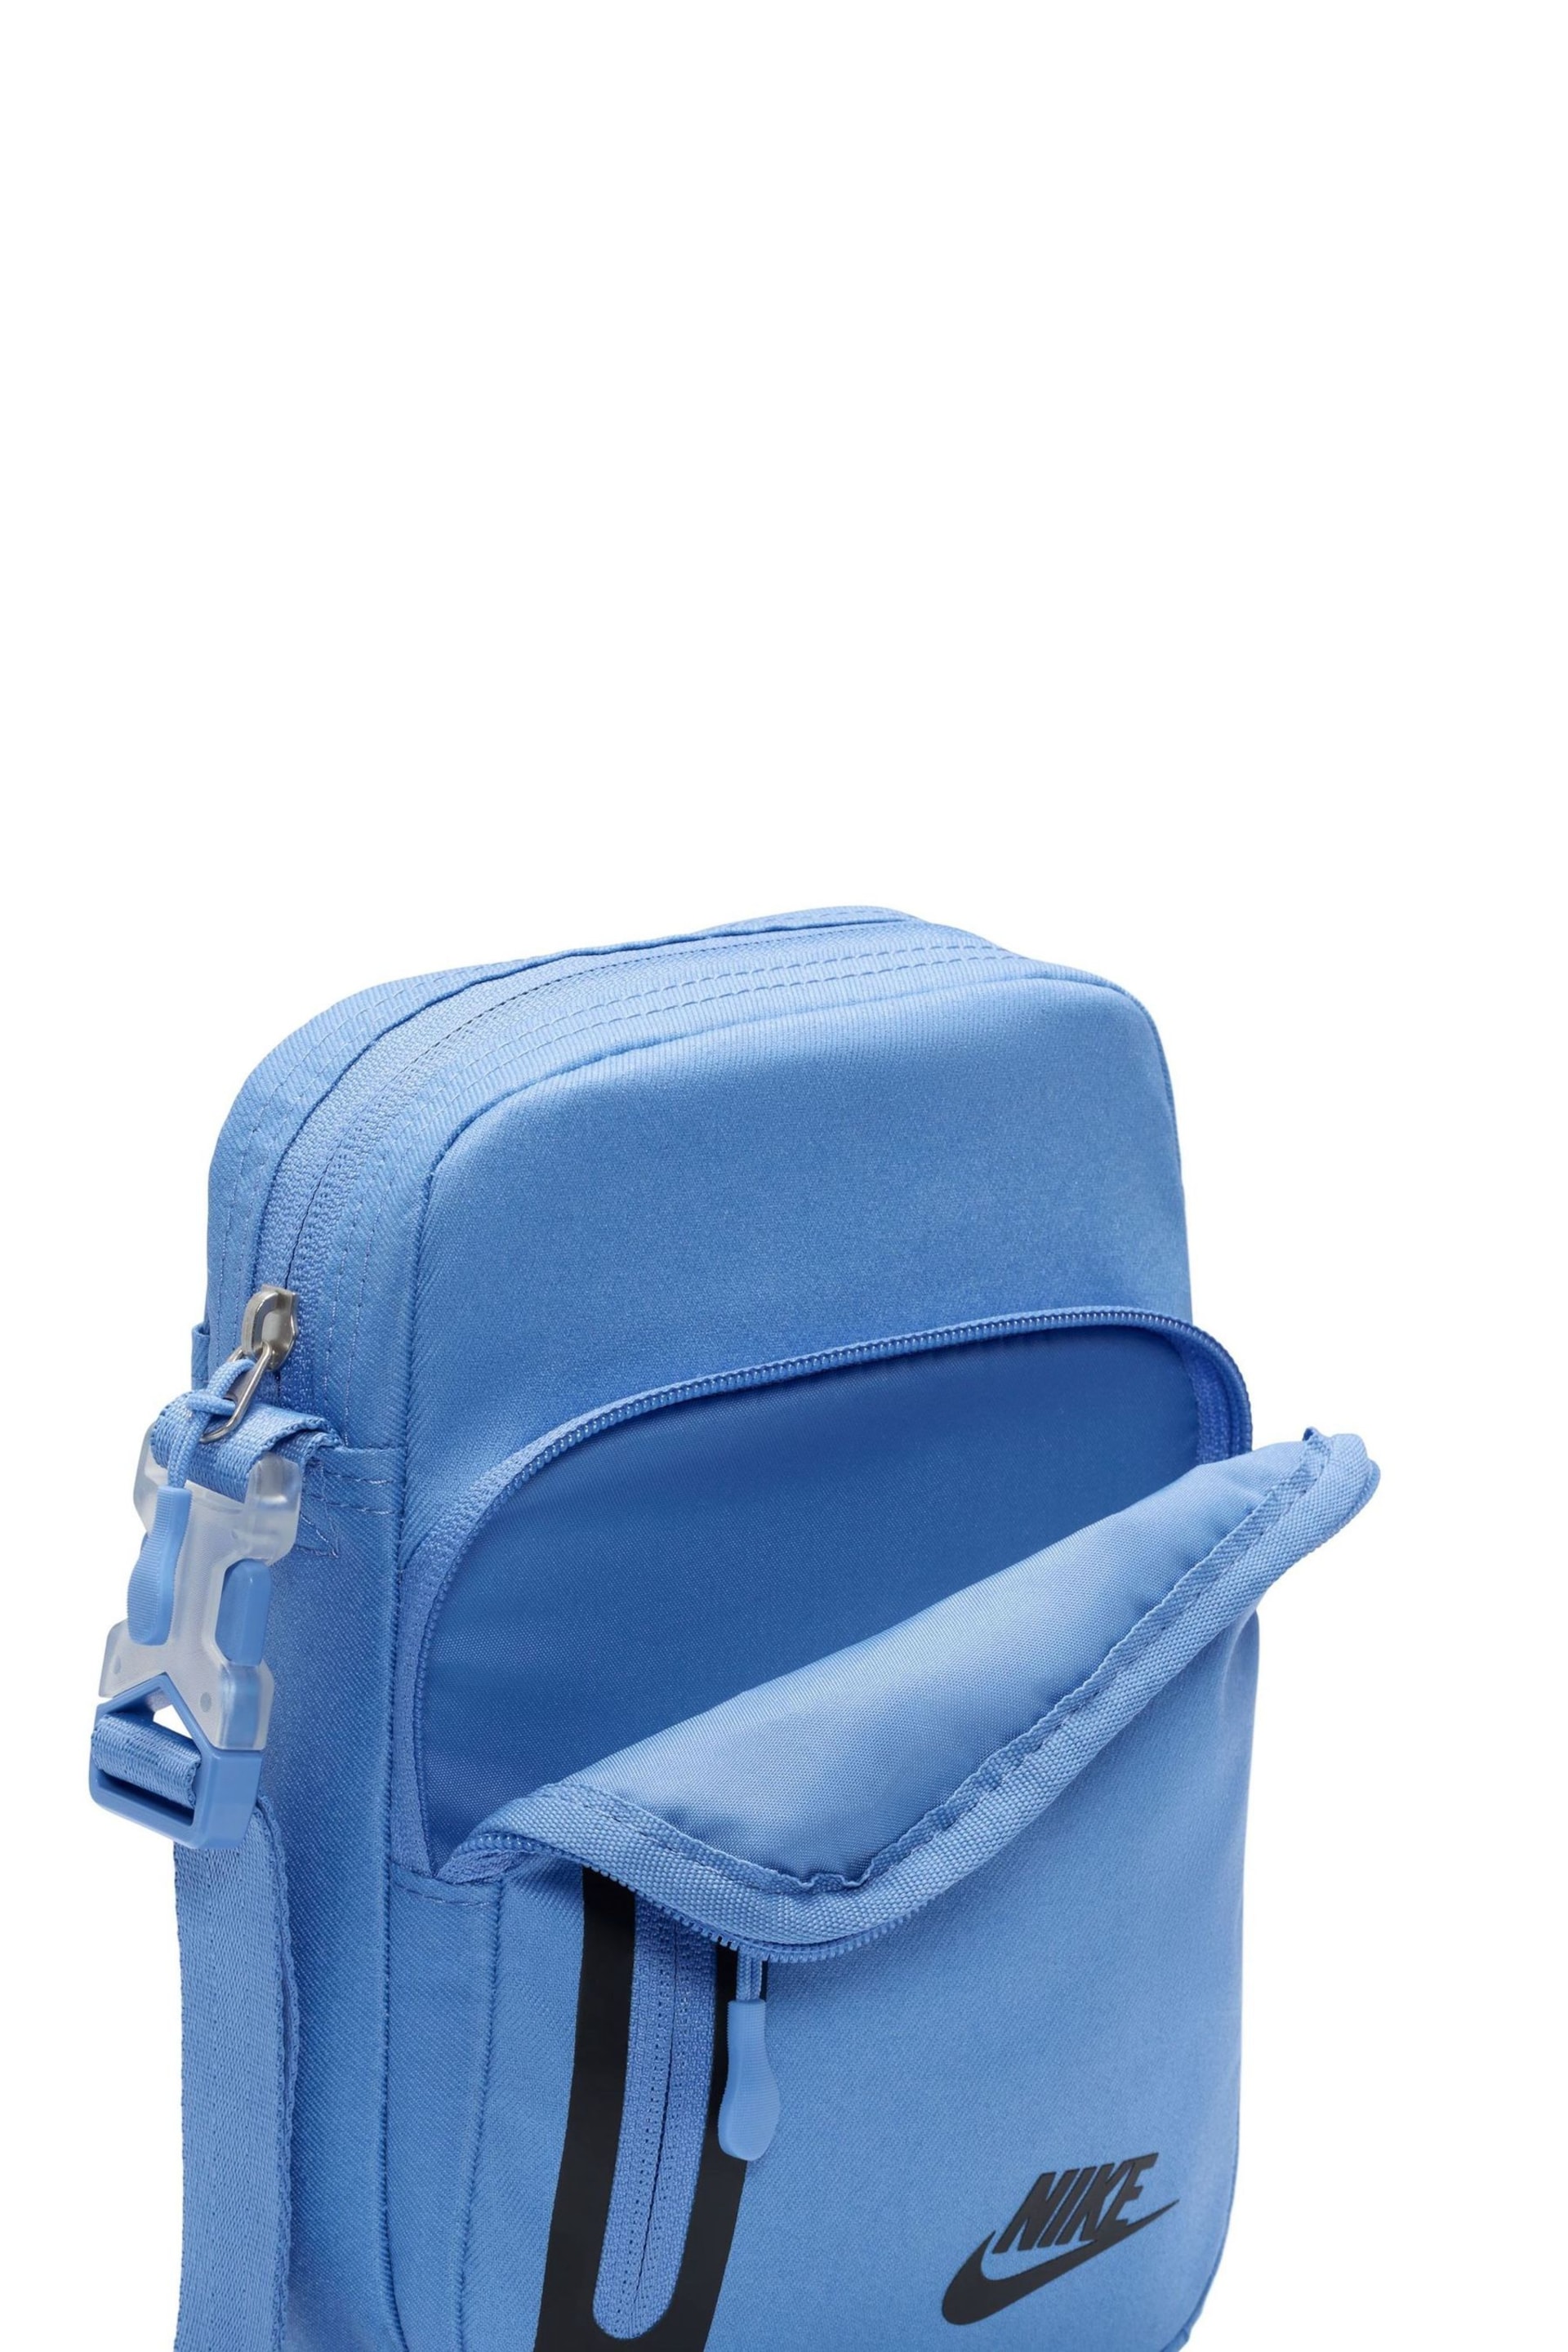 Nike Blue Elemental Premium Crossb-Bdy Bag 4L - Image 8 of 10